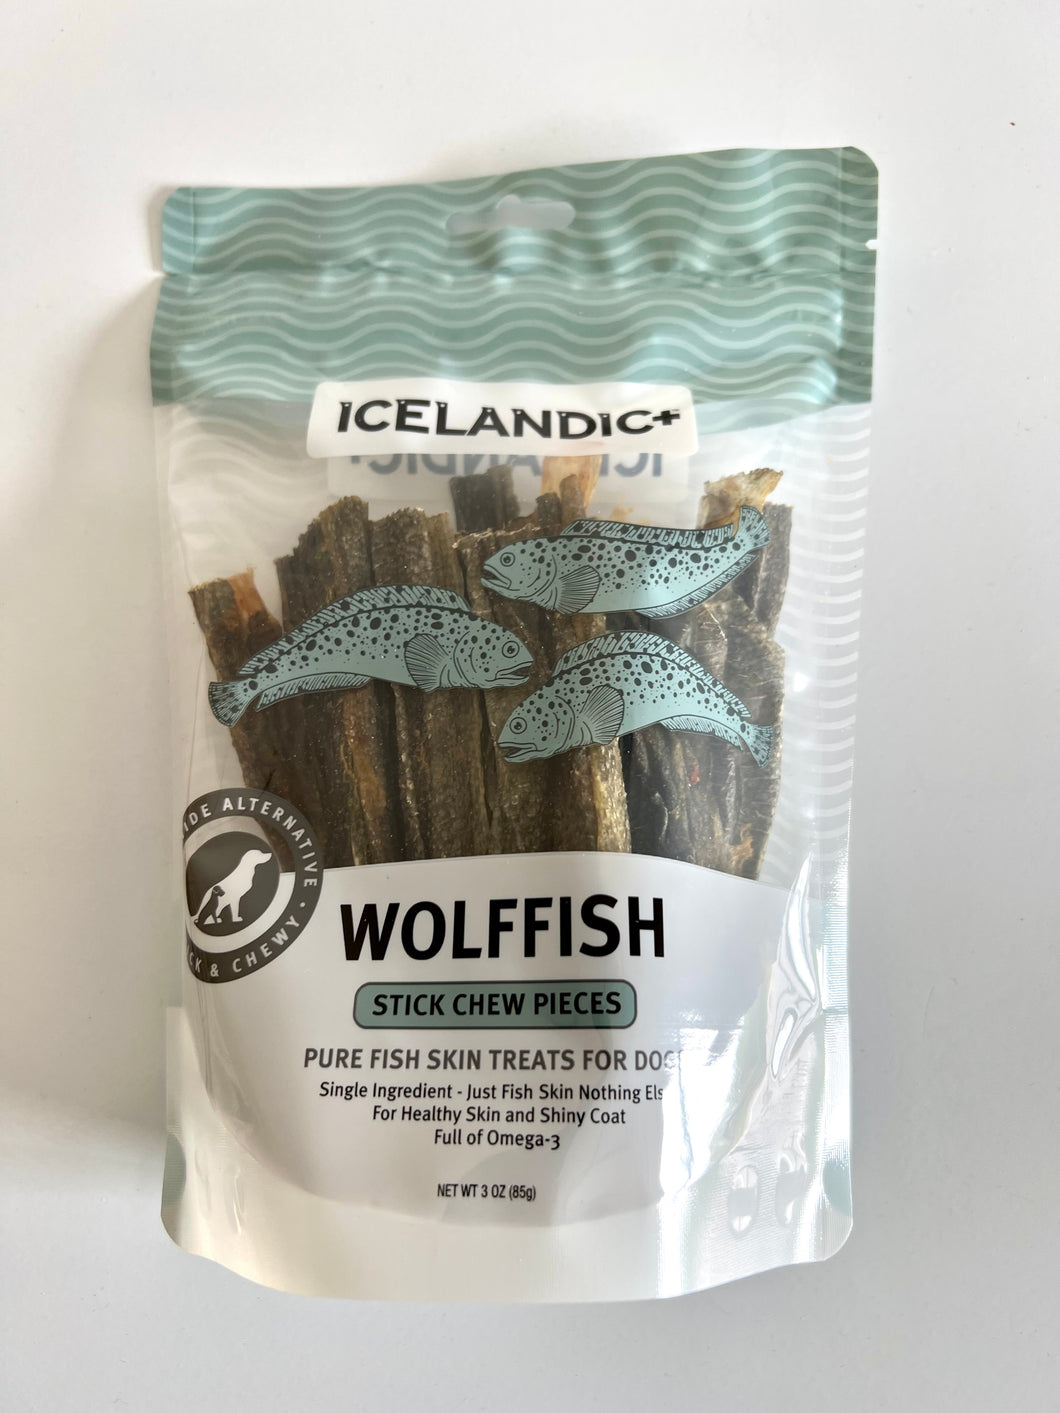 Icelandic Wolffish Pure Fish Skin Treats